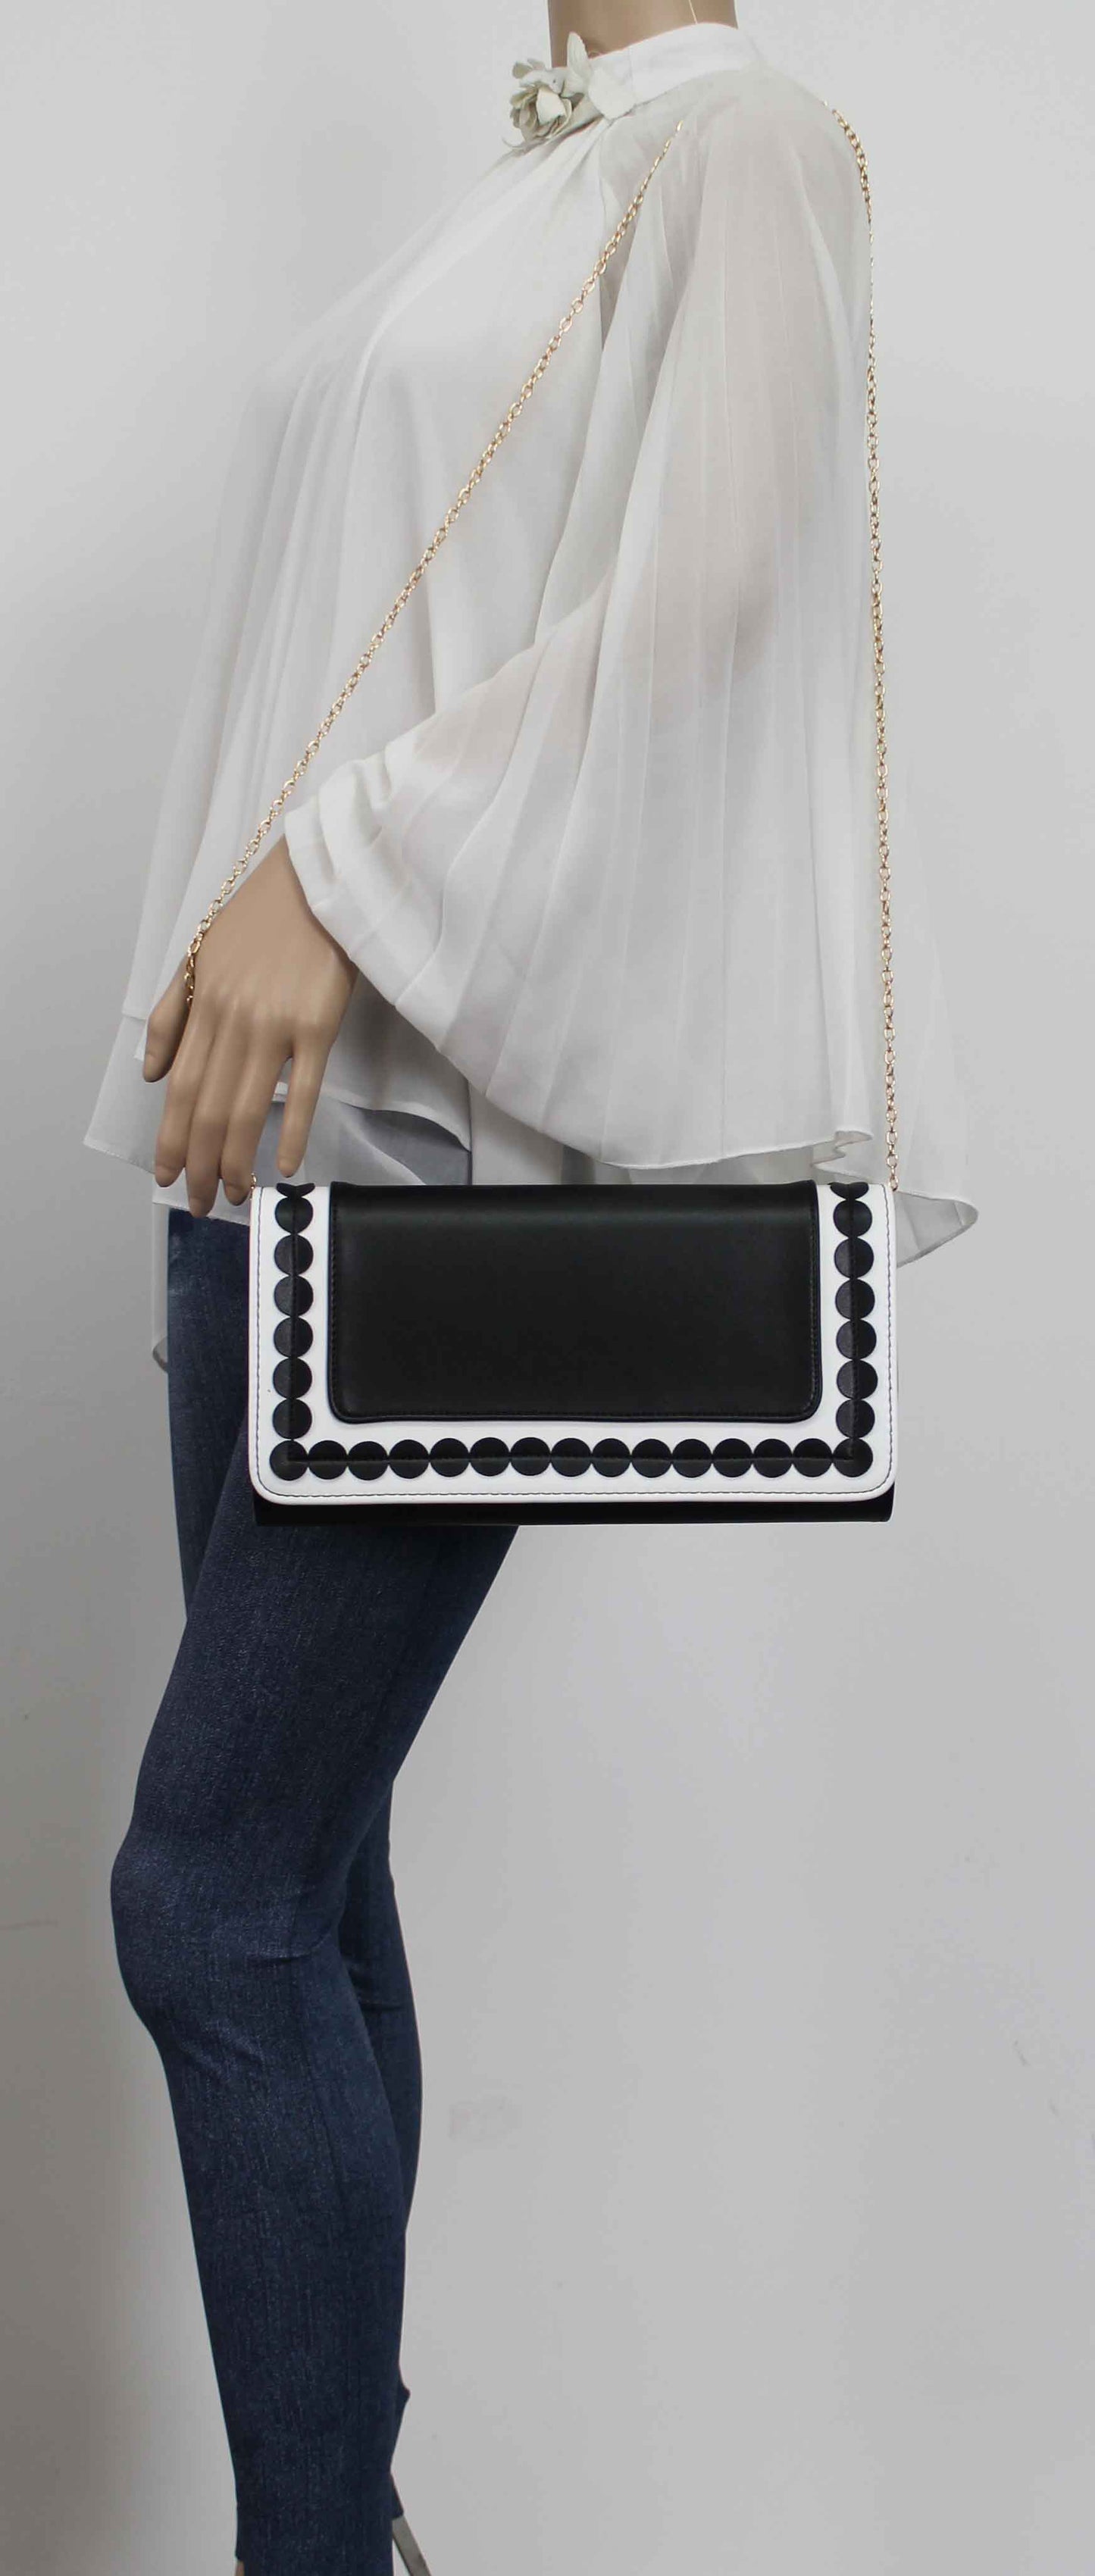 SWANKYSWANS Macy Clutch Bag Black / White Cute Cheap Clutch Bag For Weddings School and Work